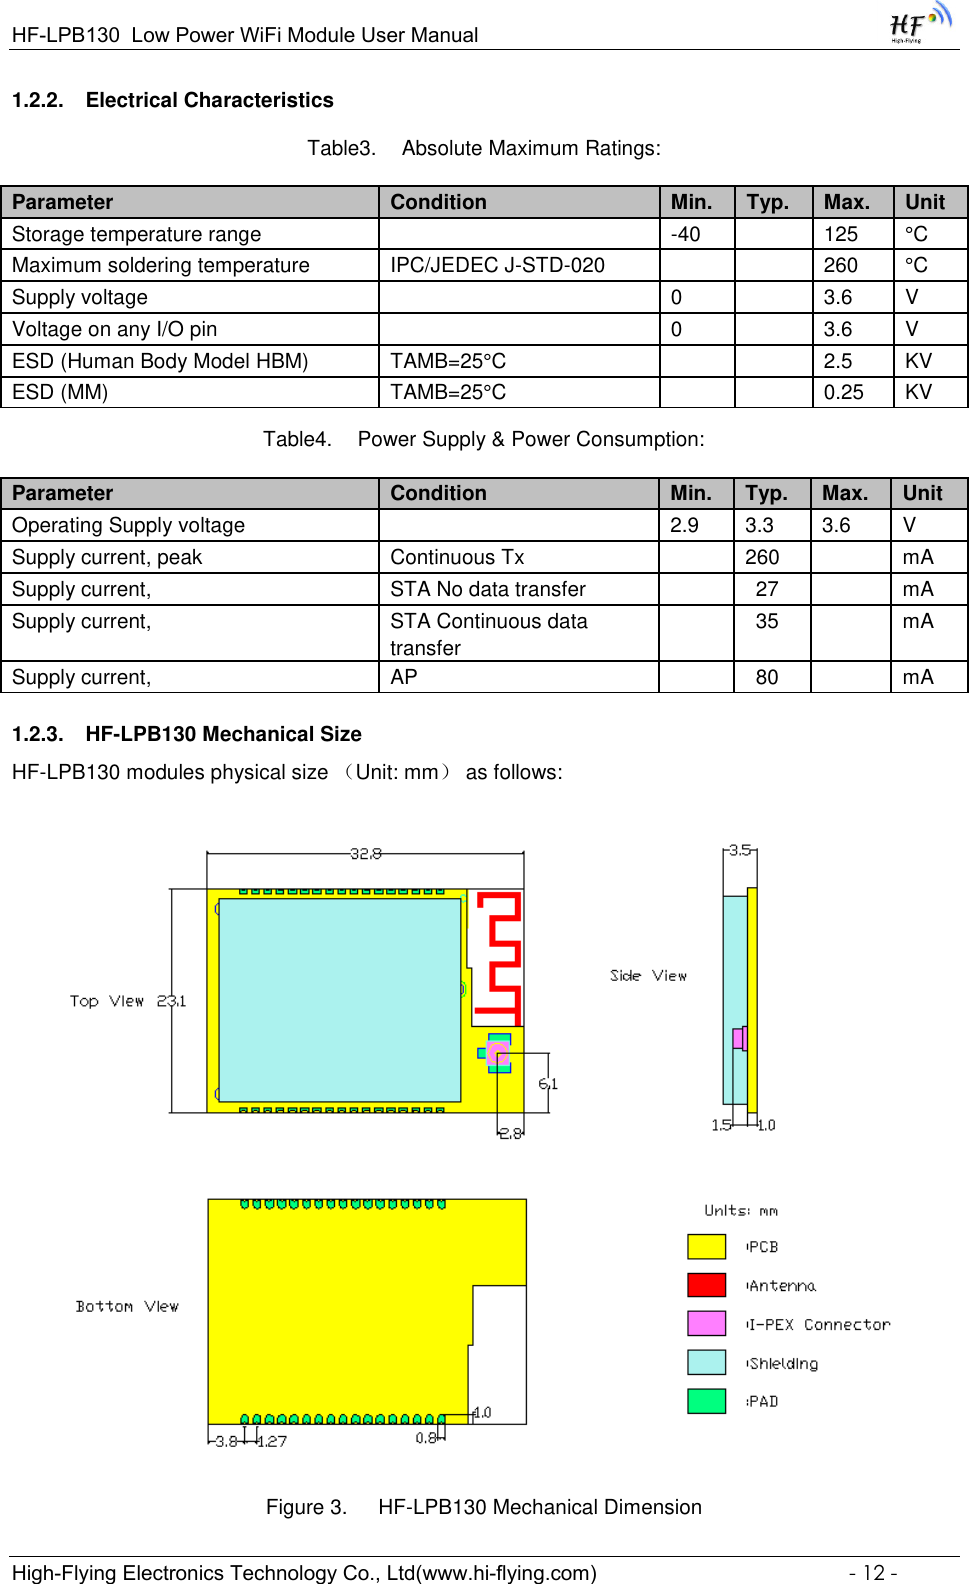 Page 12 of High Flying Electronics Technology HF-LPB130 Wi-Fi Module User Manual GPON SFU System Design